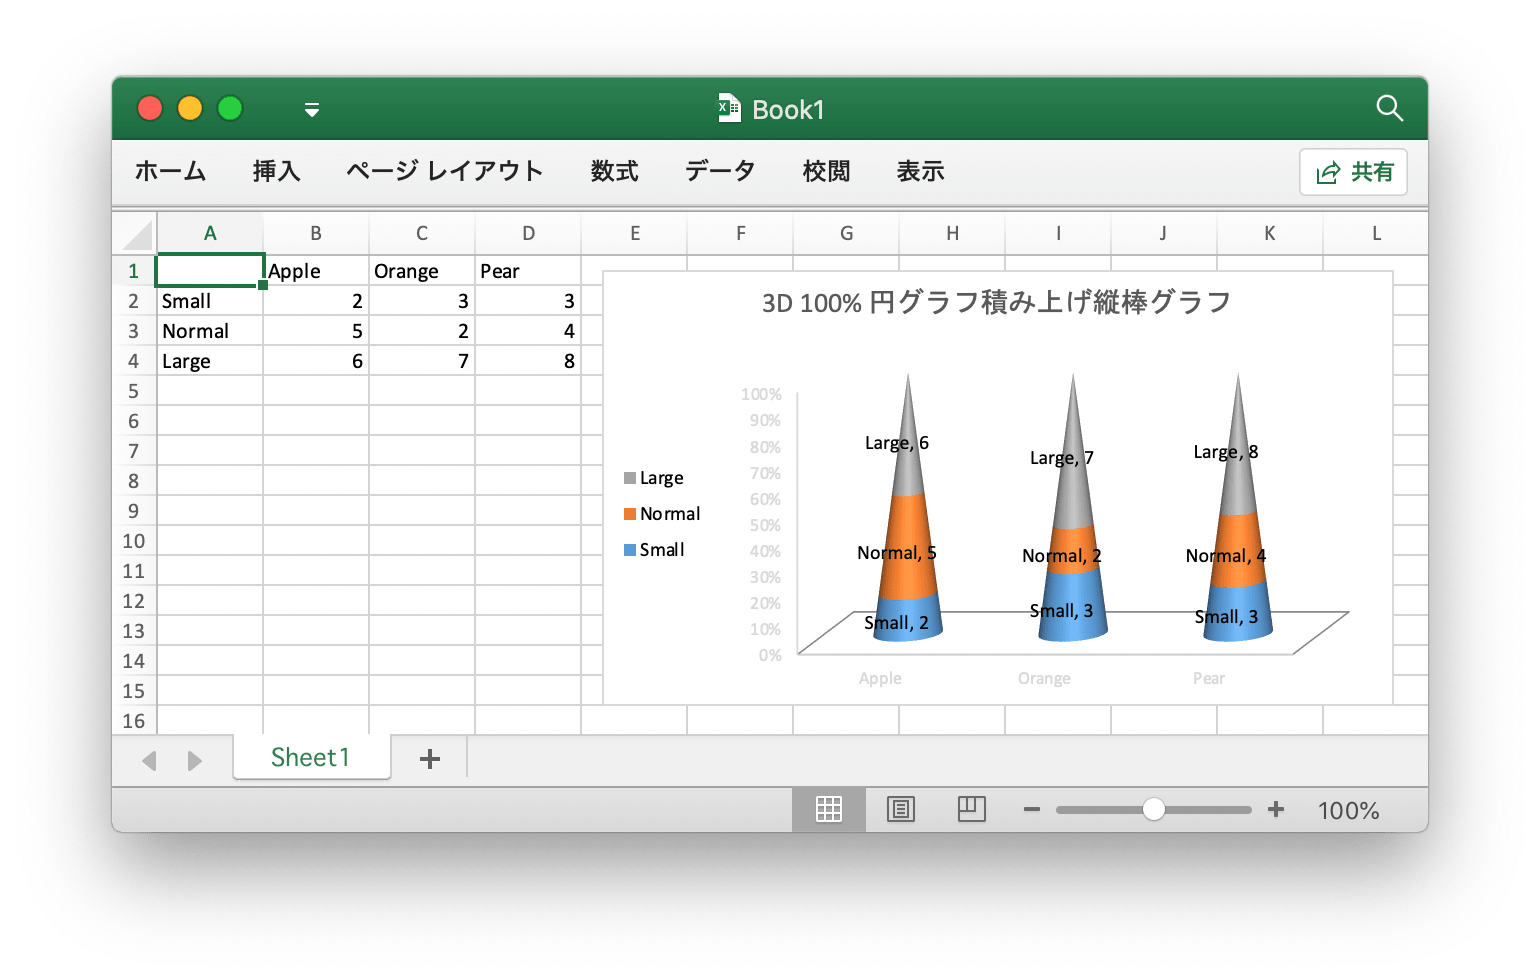 Go 言語を使用して Excel ドキュメントで 3D 100% 円グラフ積み上げ縦棒グラフ 作成する